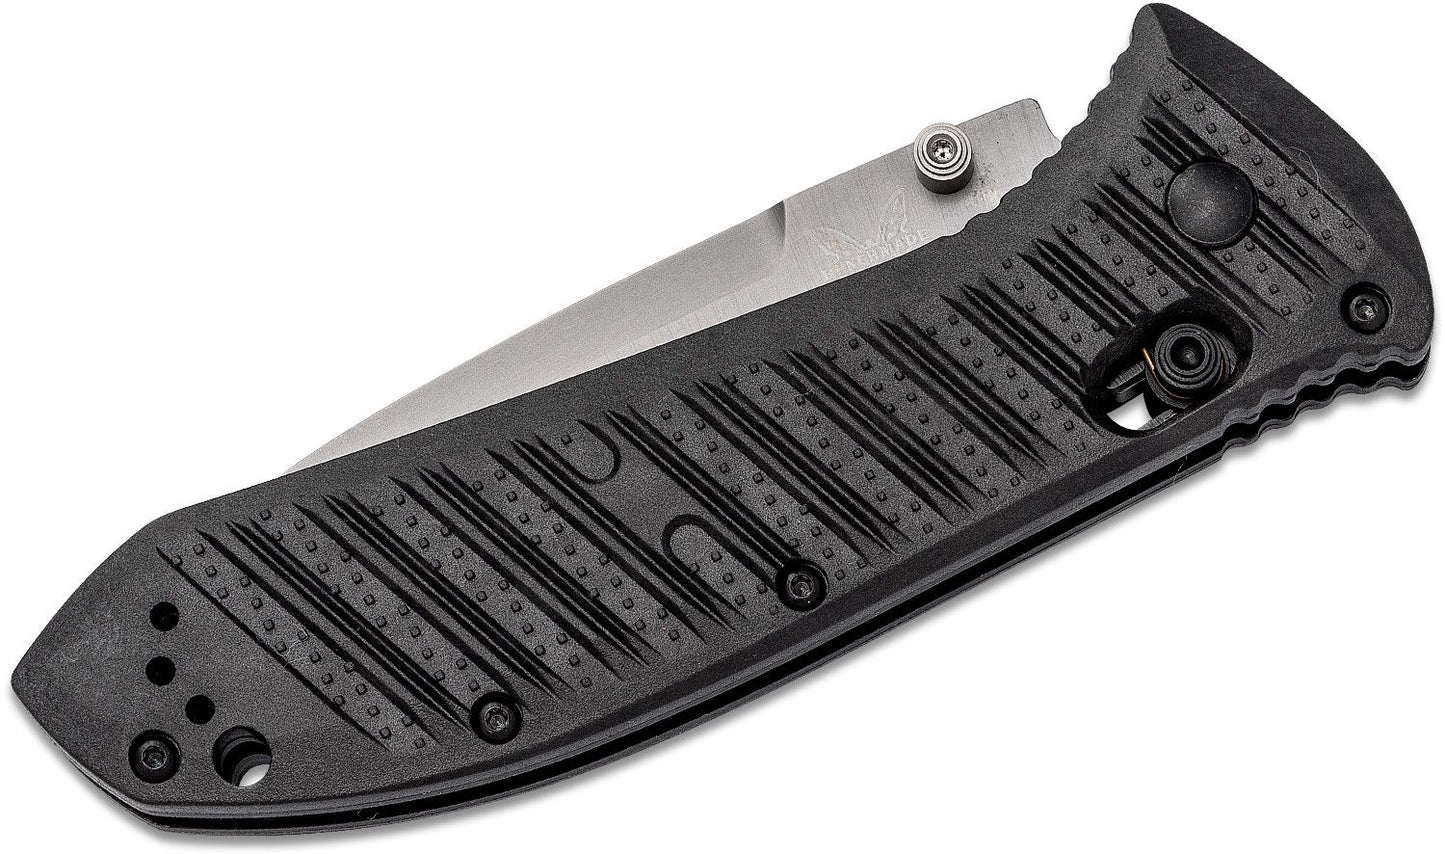 570-1 Presidio II Folding Knife 3.72" S30V Satin Plain Blade, Milled Black CF-Elite Handles